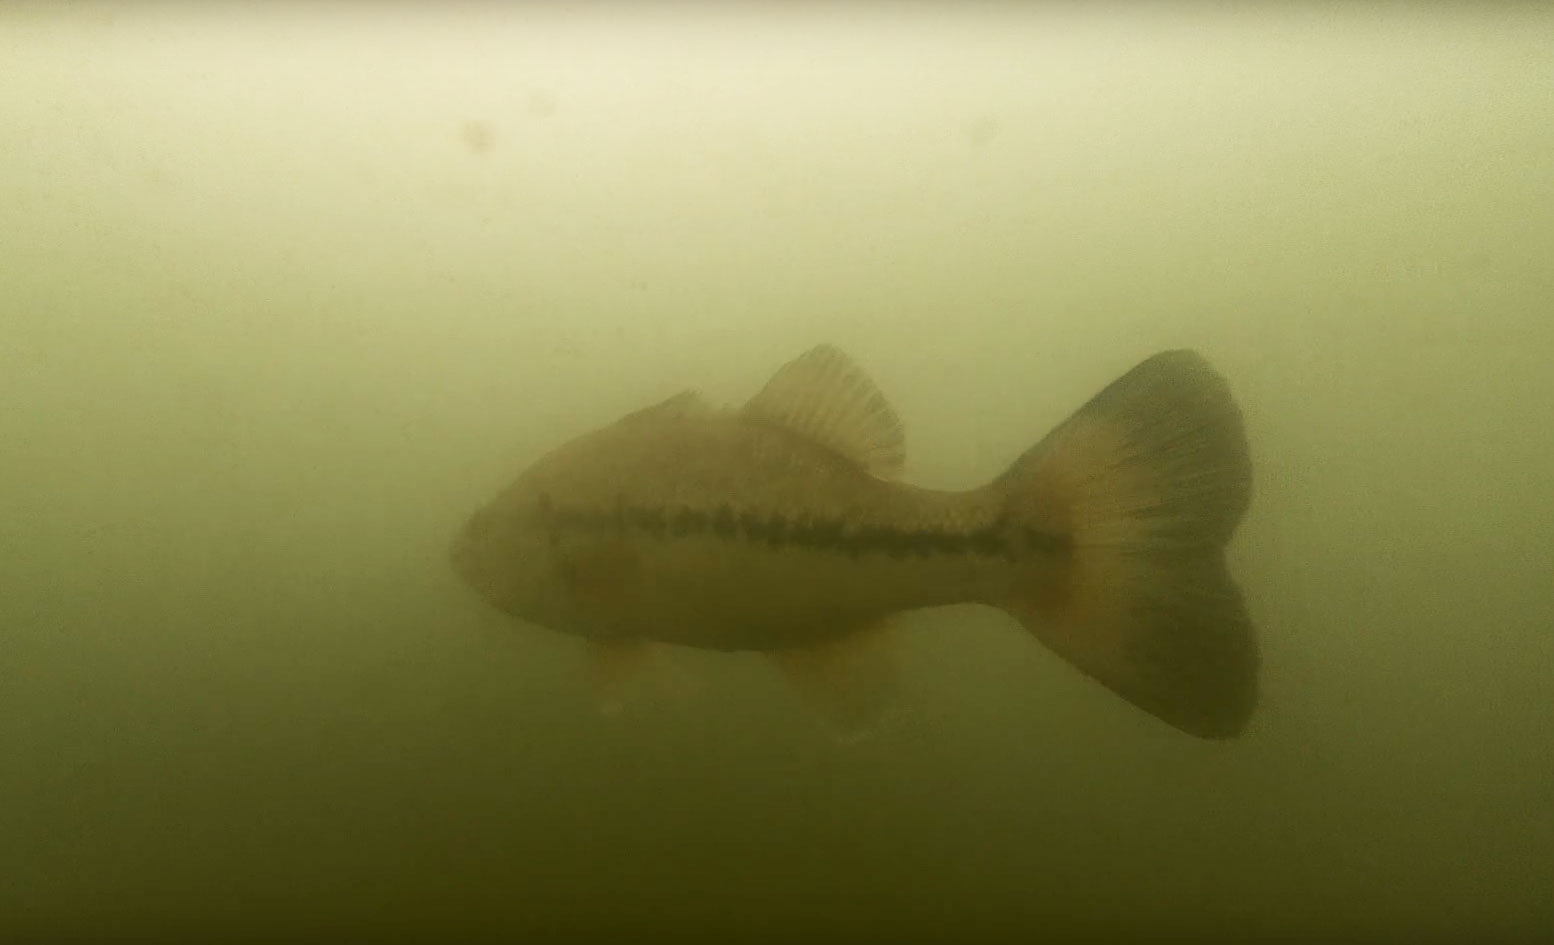 underwater-drone-fish-lake-st-clair.jpg